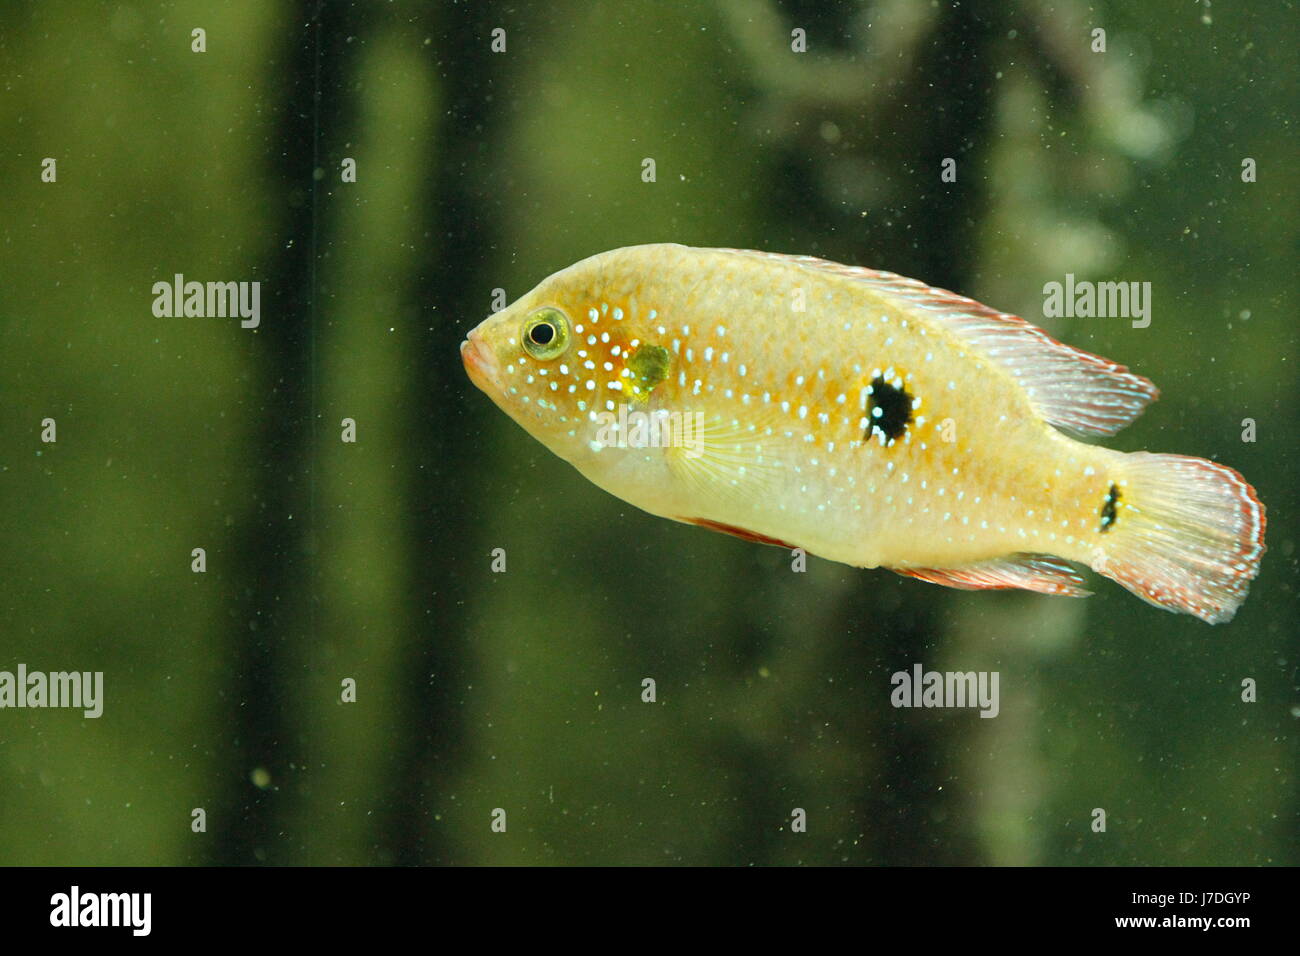 coral fish in closeup Stock Photo